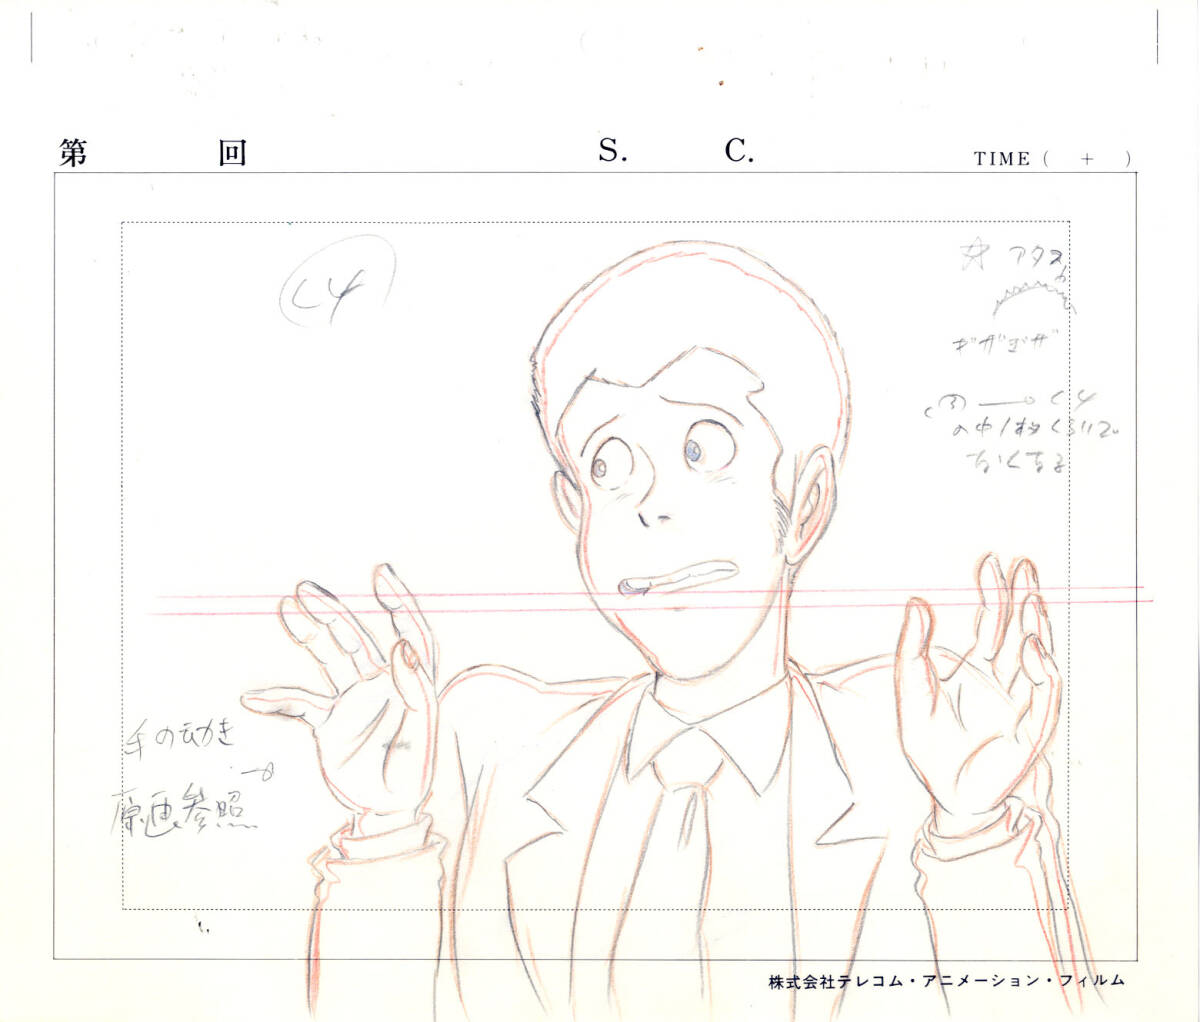  Lupin III OVA version original picture set 